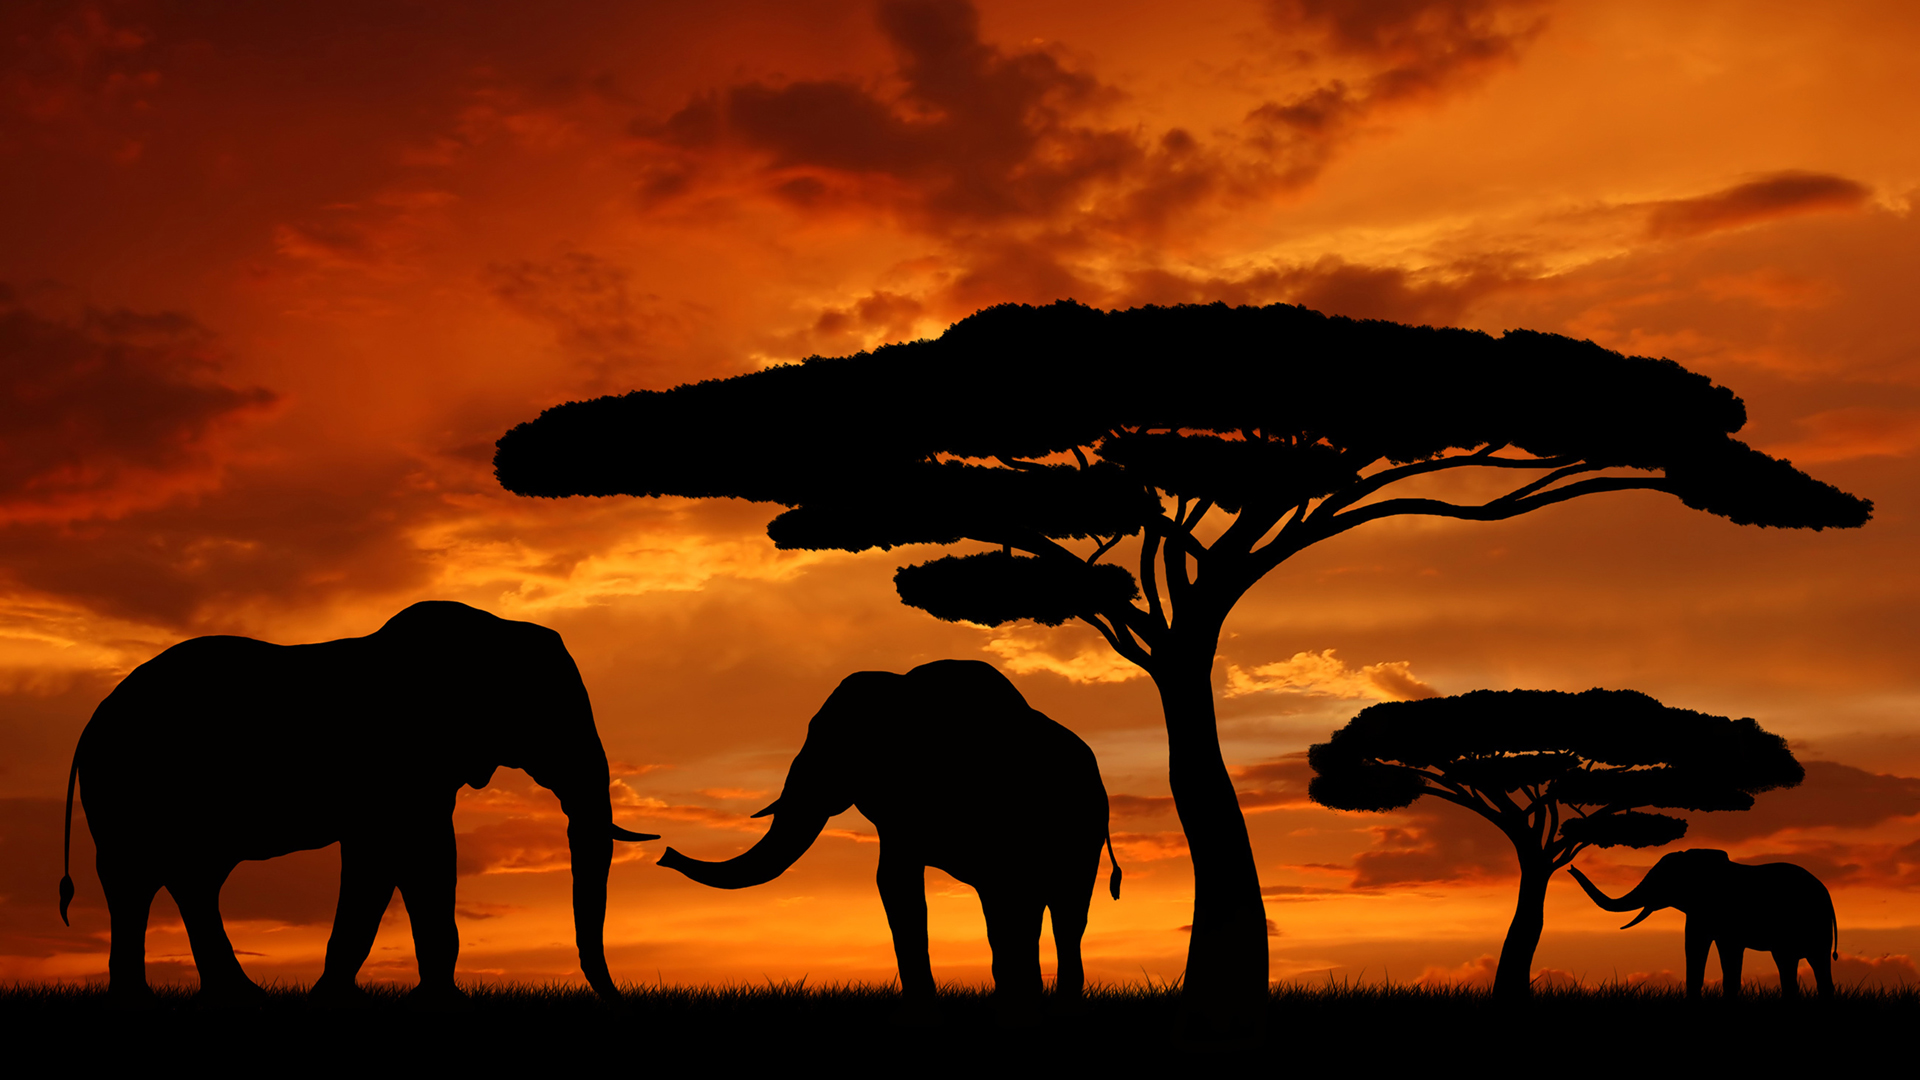 Silhouette Elephants In The Sunset | DayWallpaper